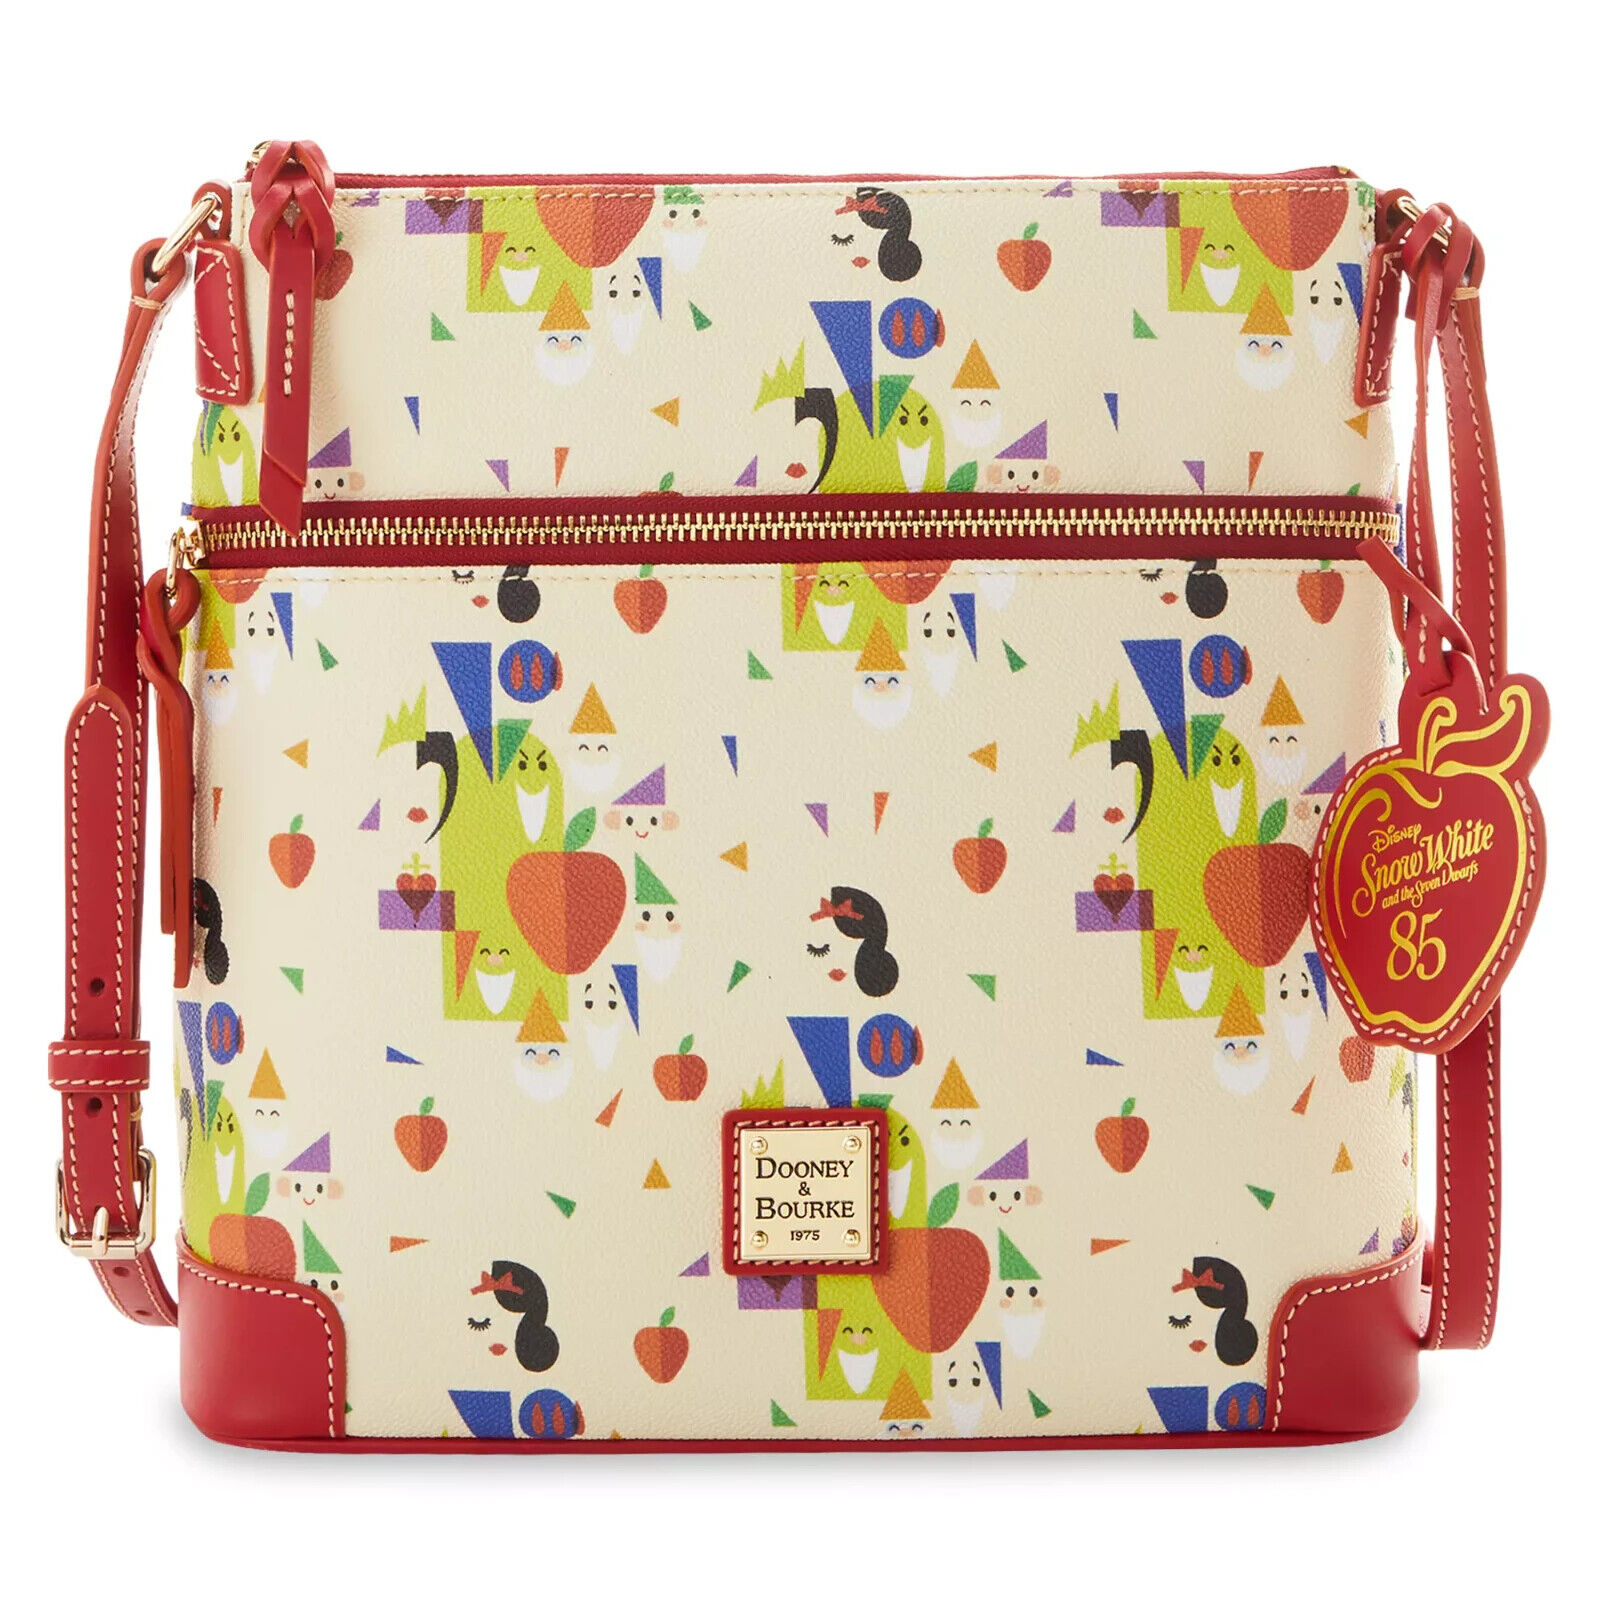 Disney Dooney & Bourke Snow White Seven Dwarfs 85th Anniversary Crossbody Bag